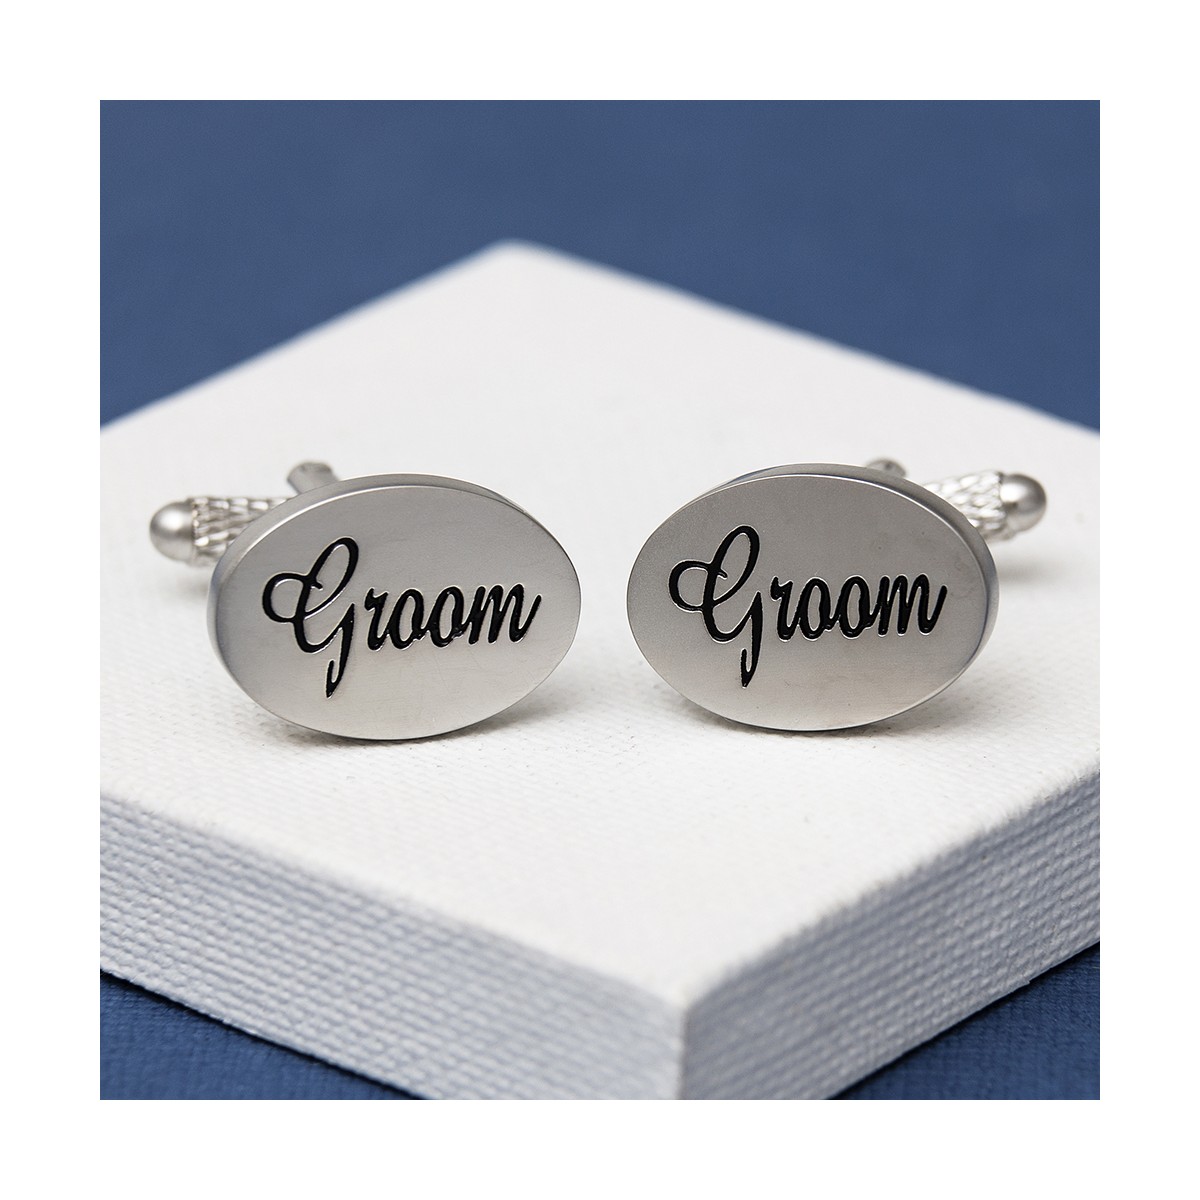 Details about   Men's Paisley Evening Wedding Groom Work Silver Plated Cufflinks